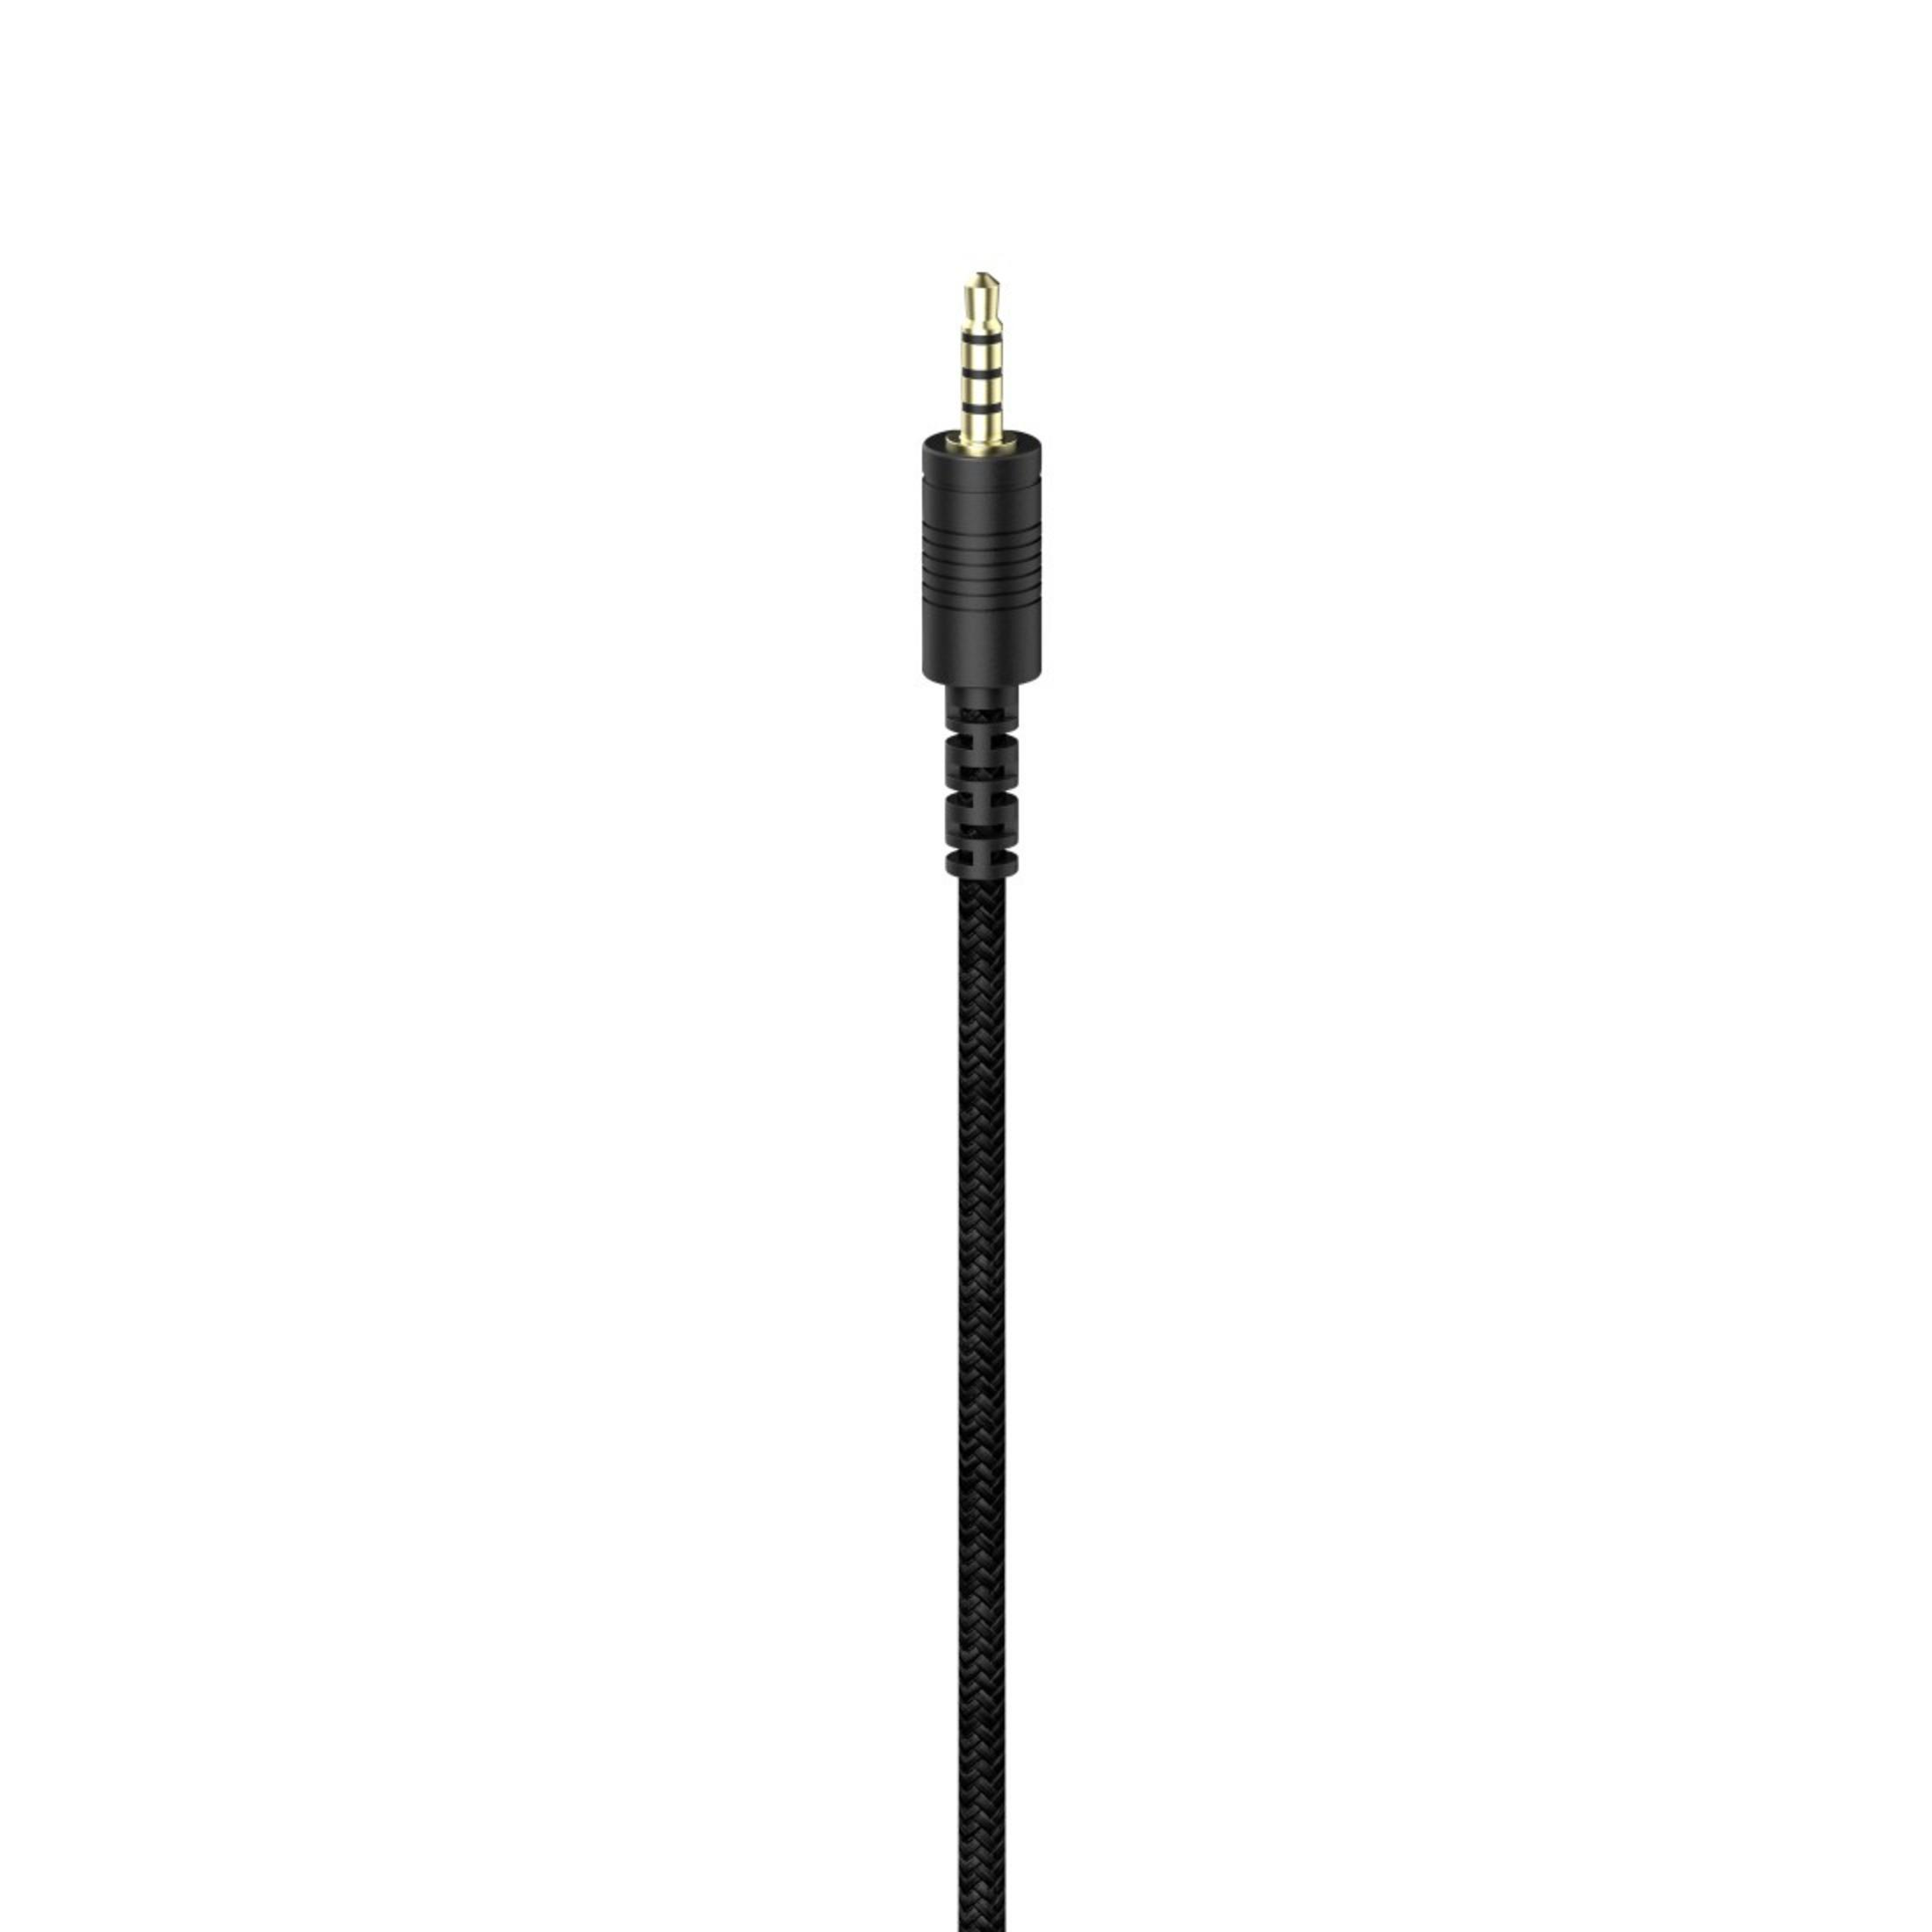 URAGE SoundZ 300, Over-ear Schwarz Headset